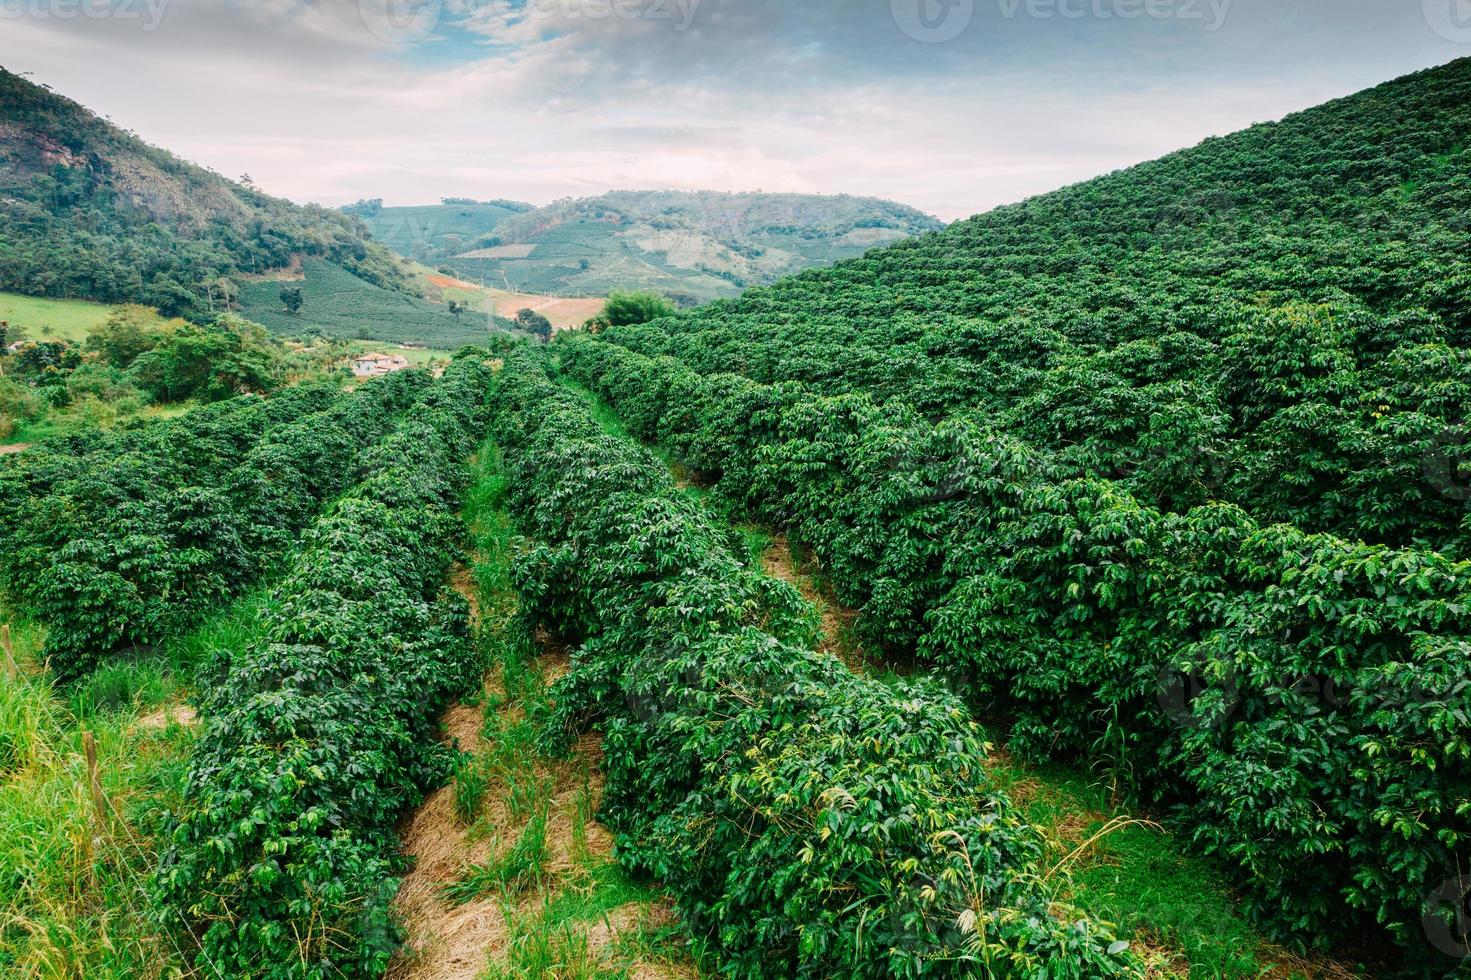 View of Arabica coffee plants in Minas Gerais, Brazil photo